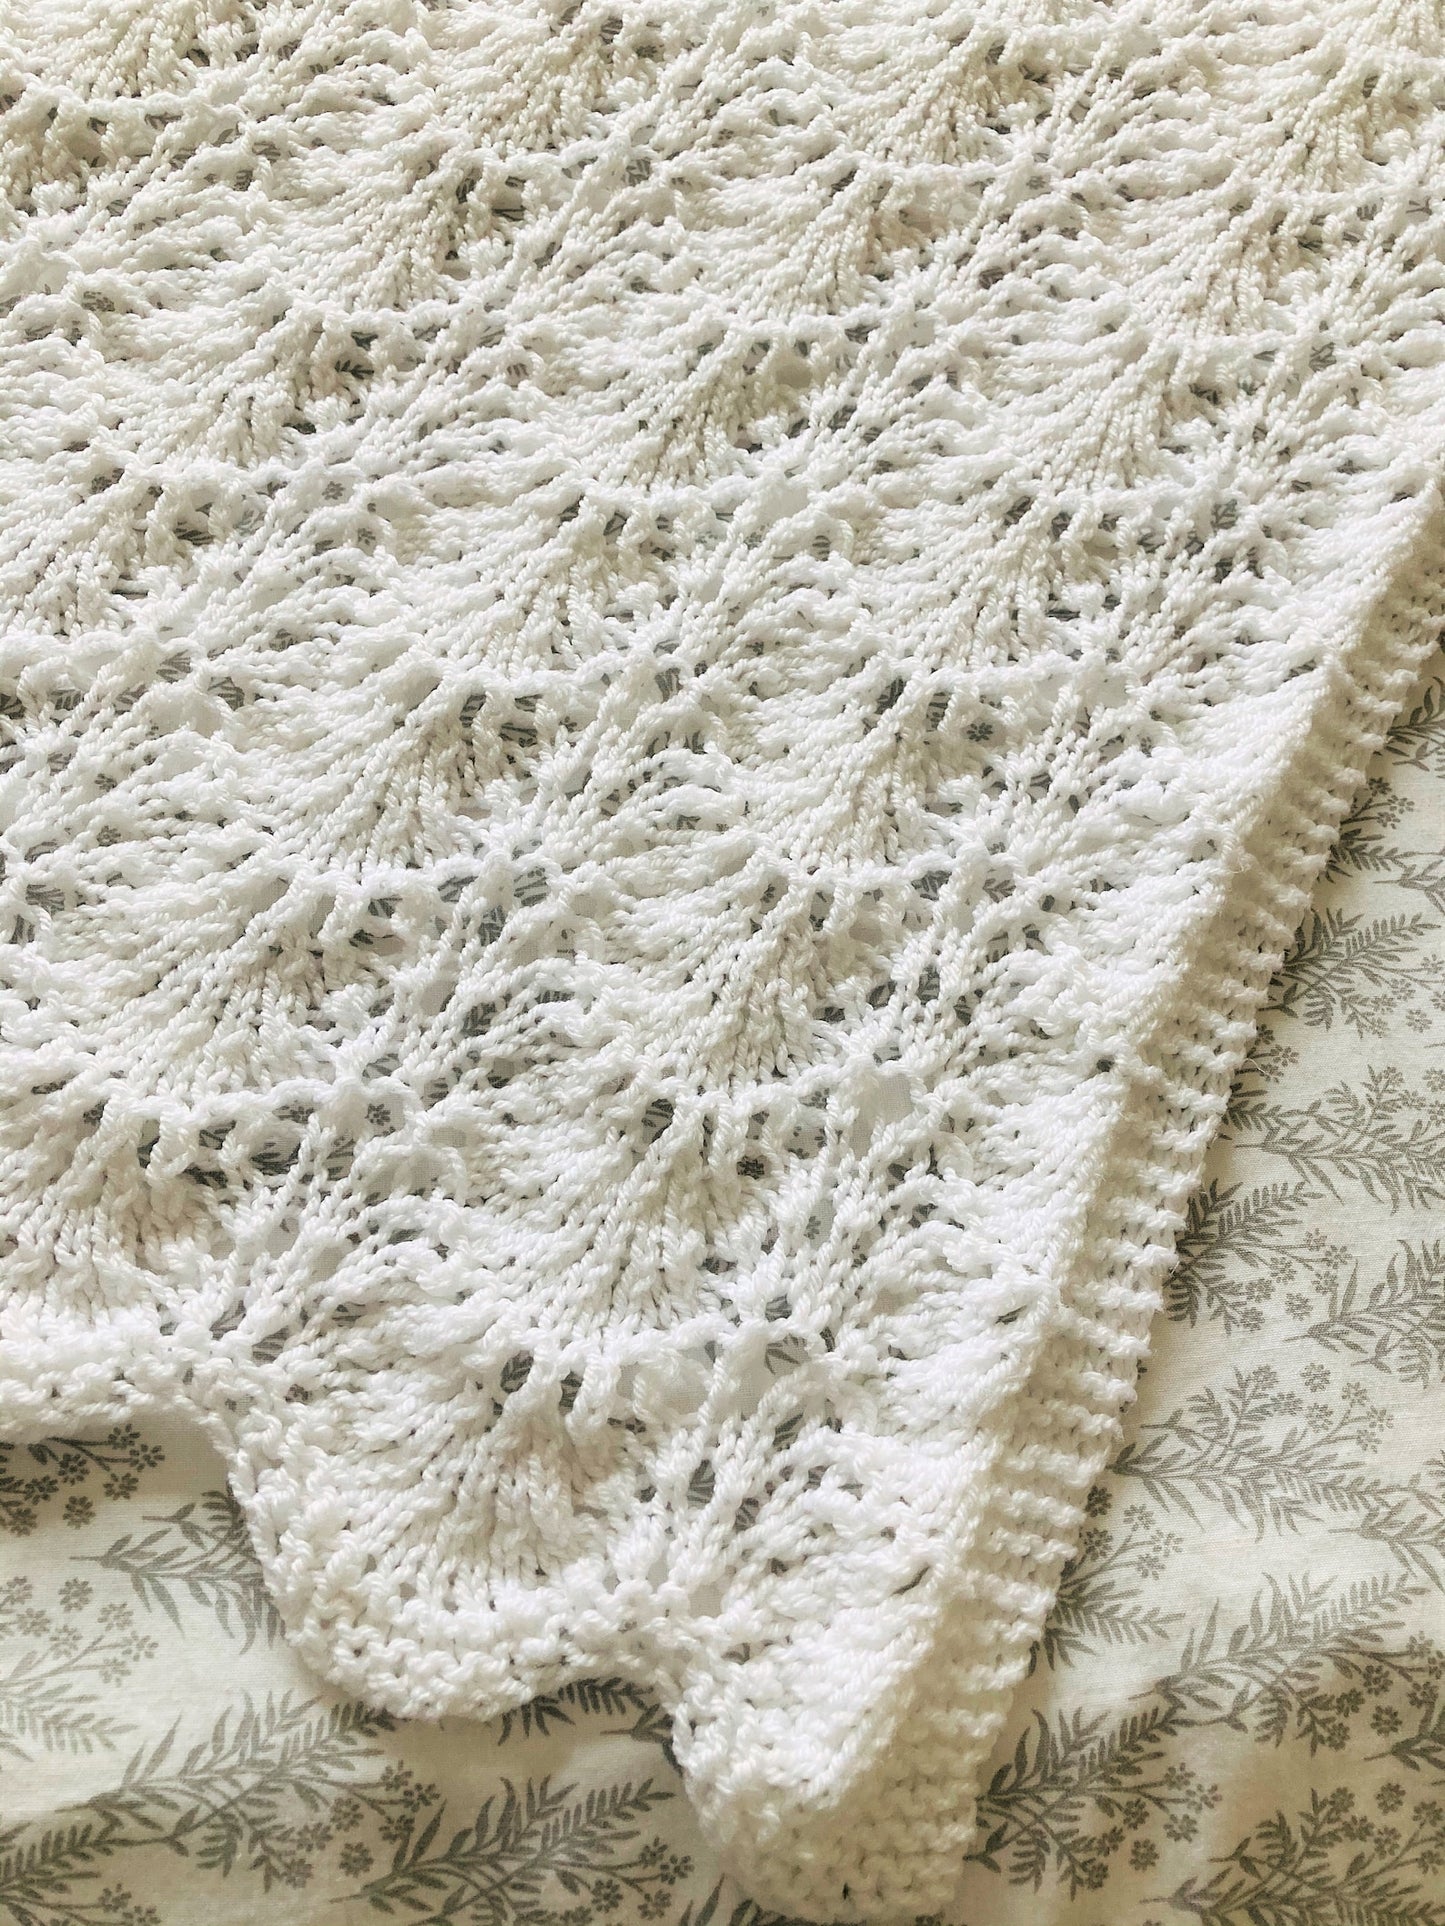 Shells & Lace Baby Blanket Knitting Pattern